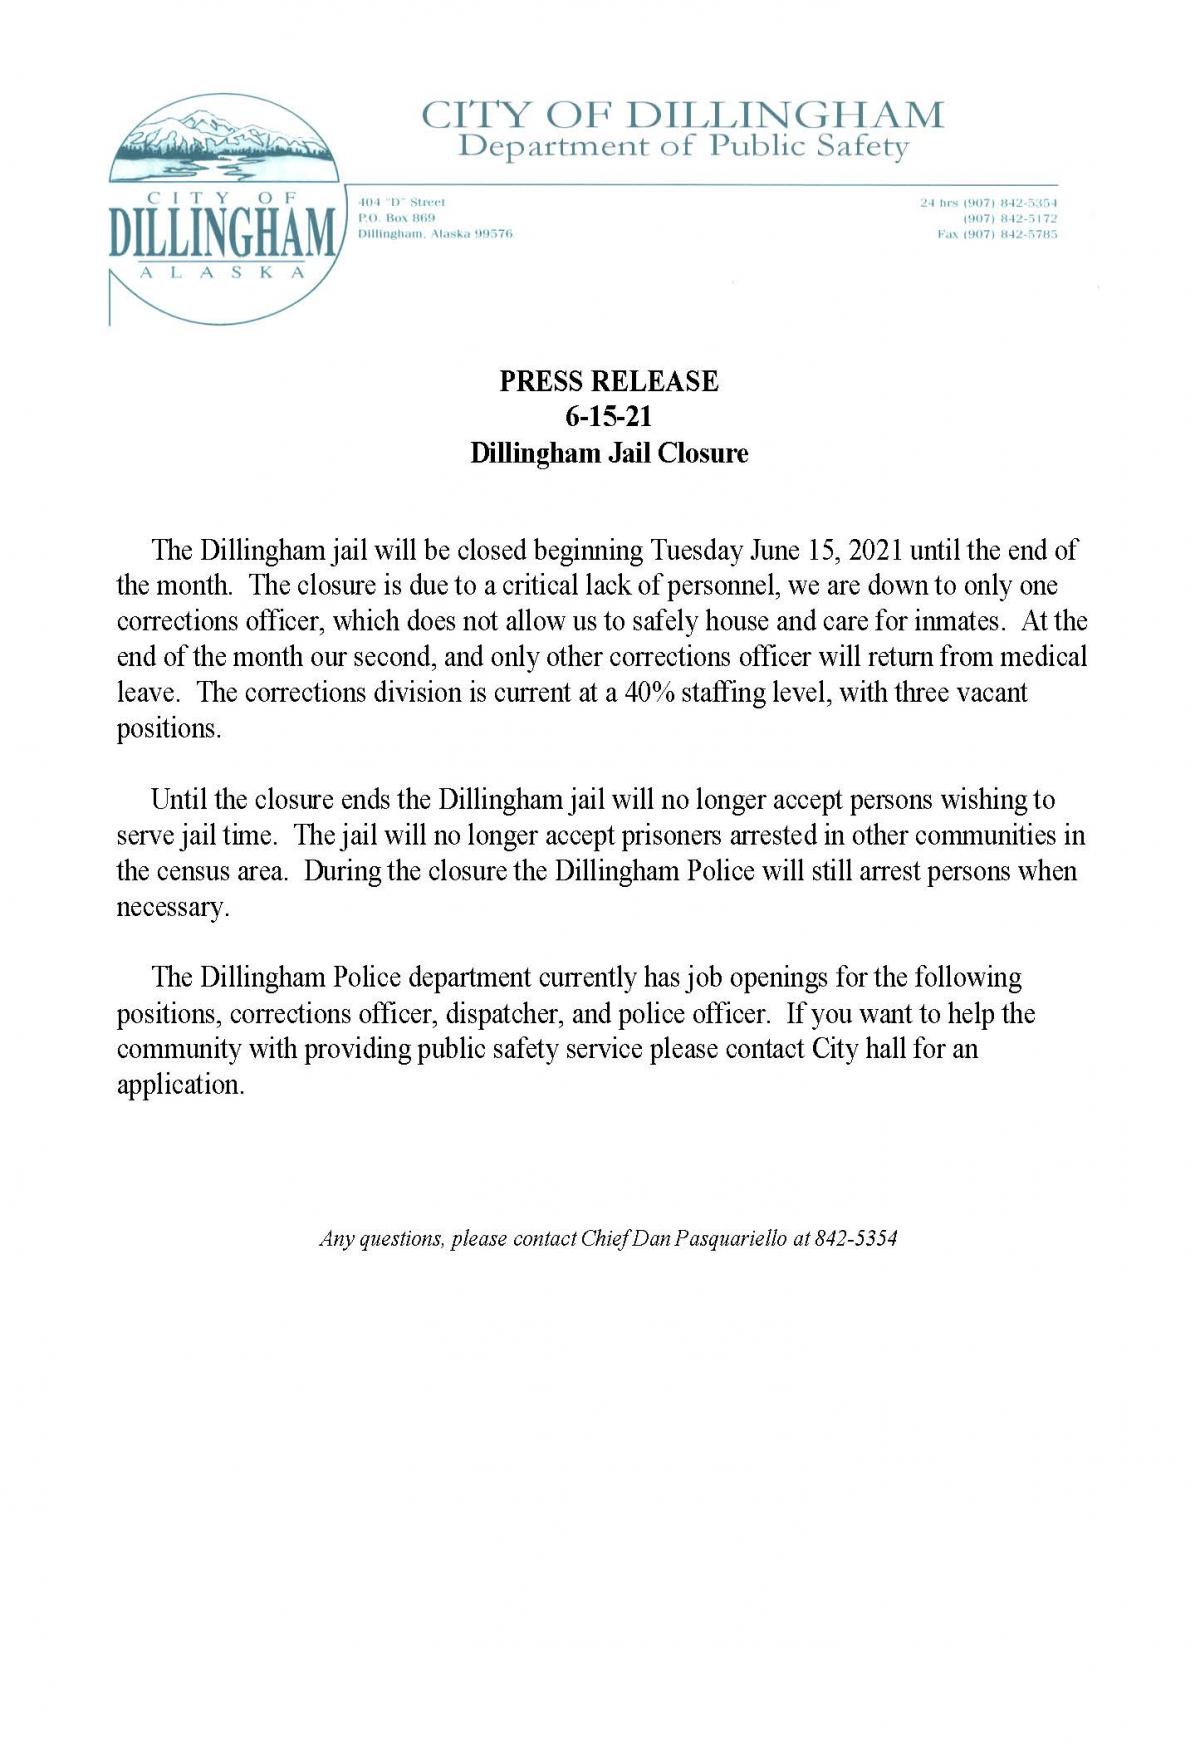 Dillingham Jail Closure Press Release